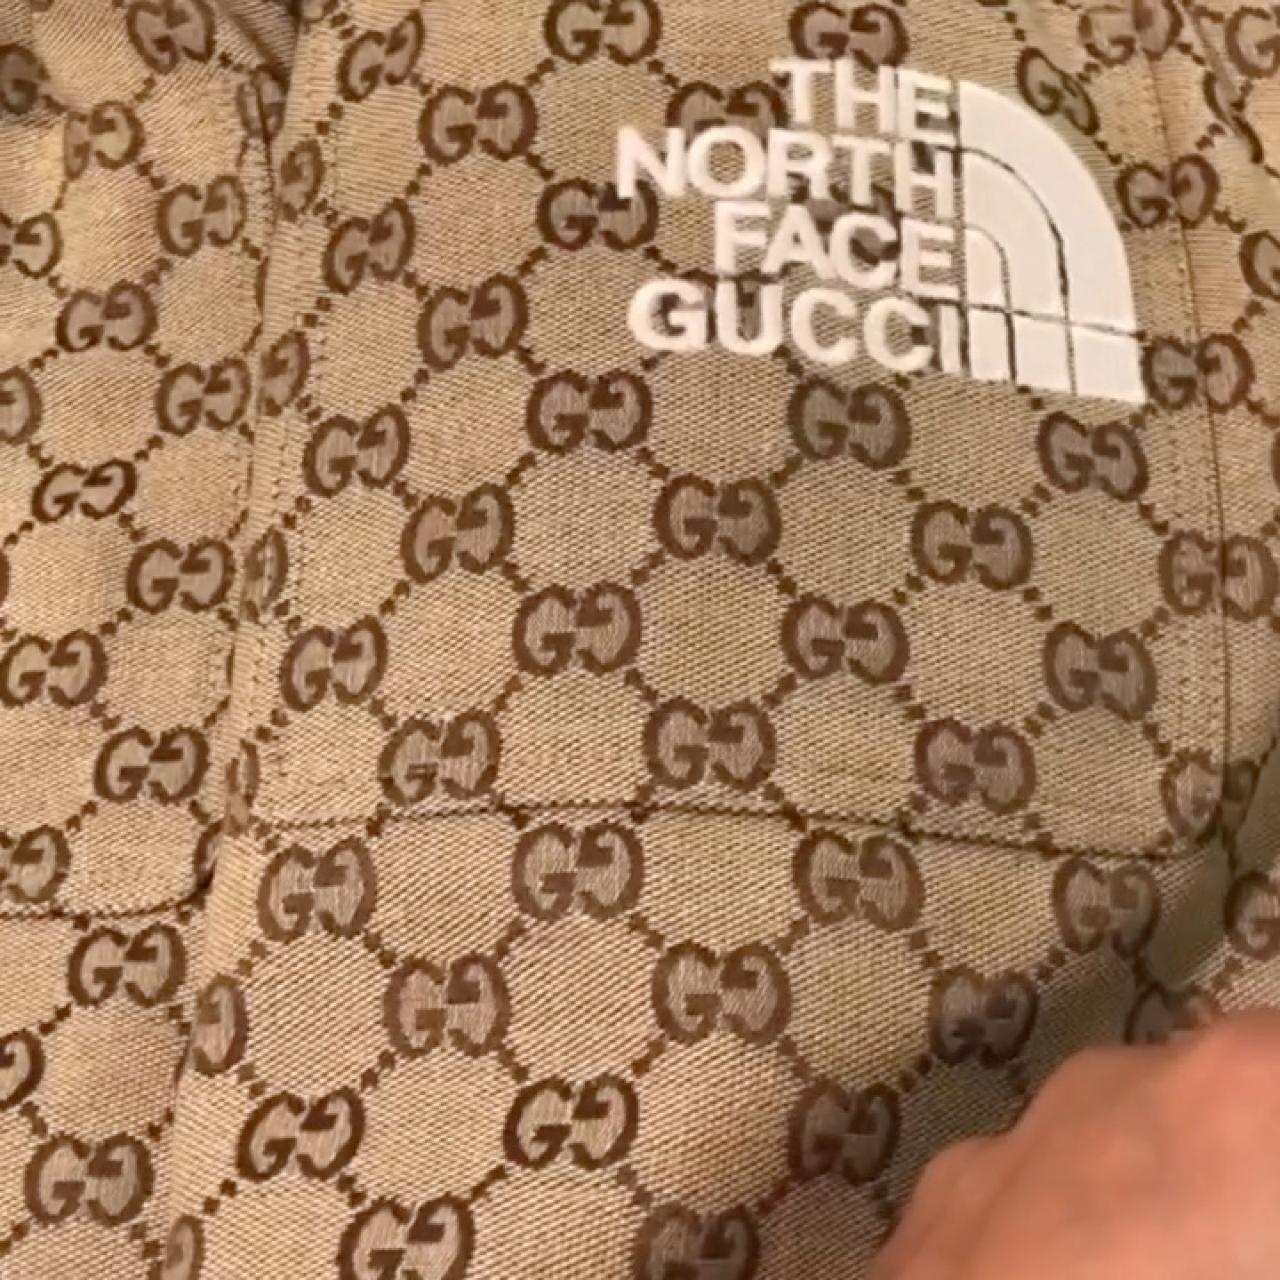 Gucci x The North Face shorts • Seller: Jacket007